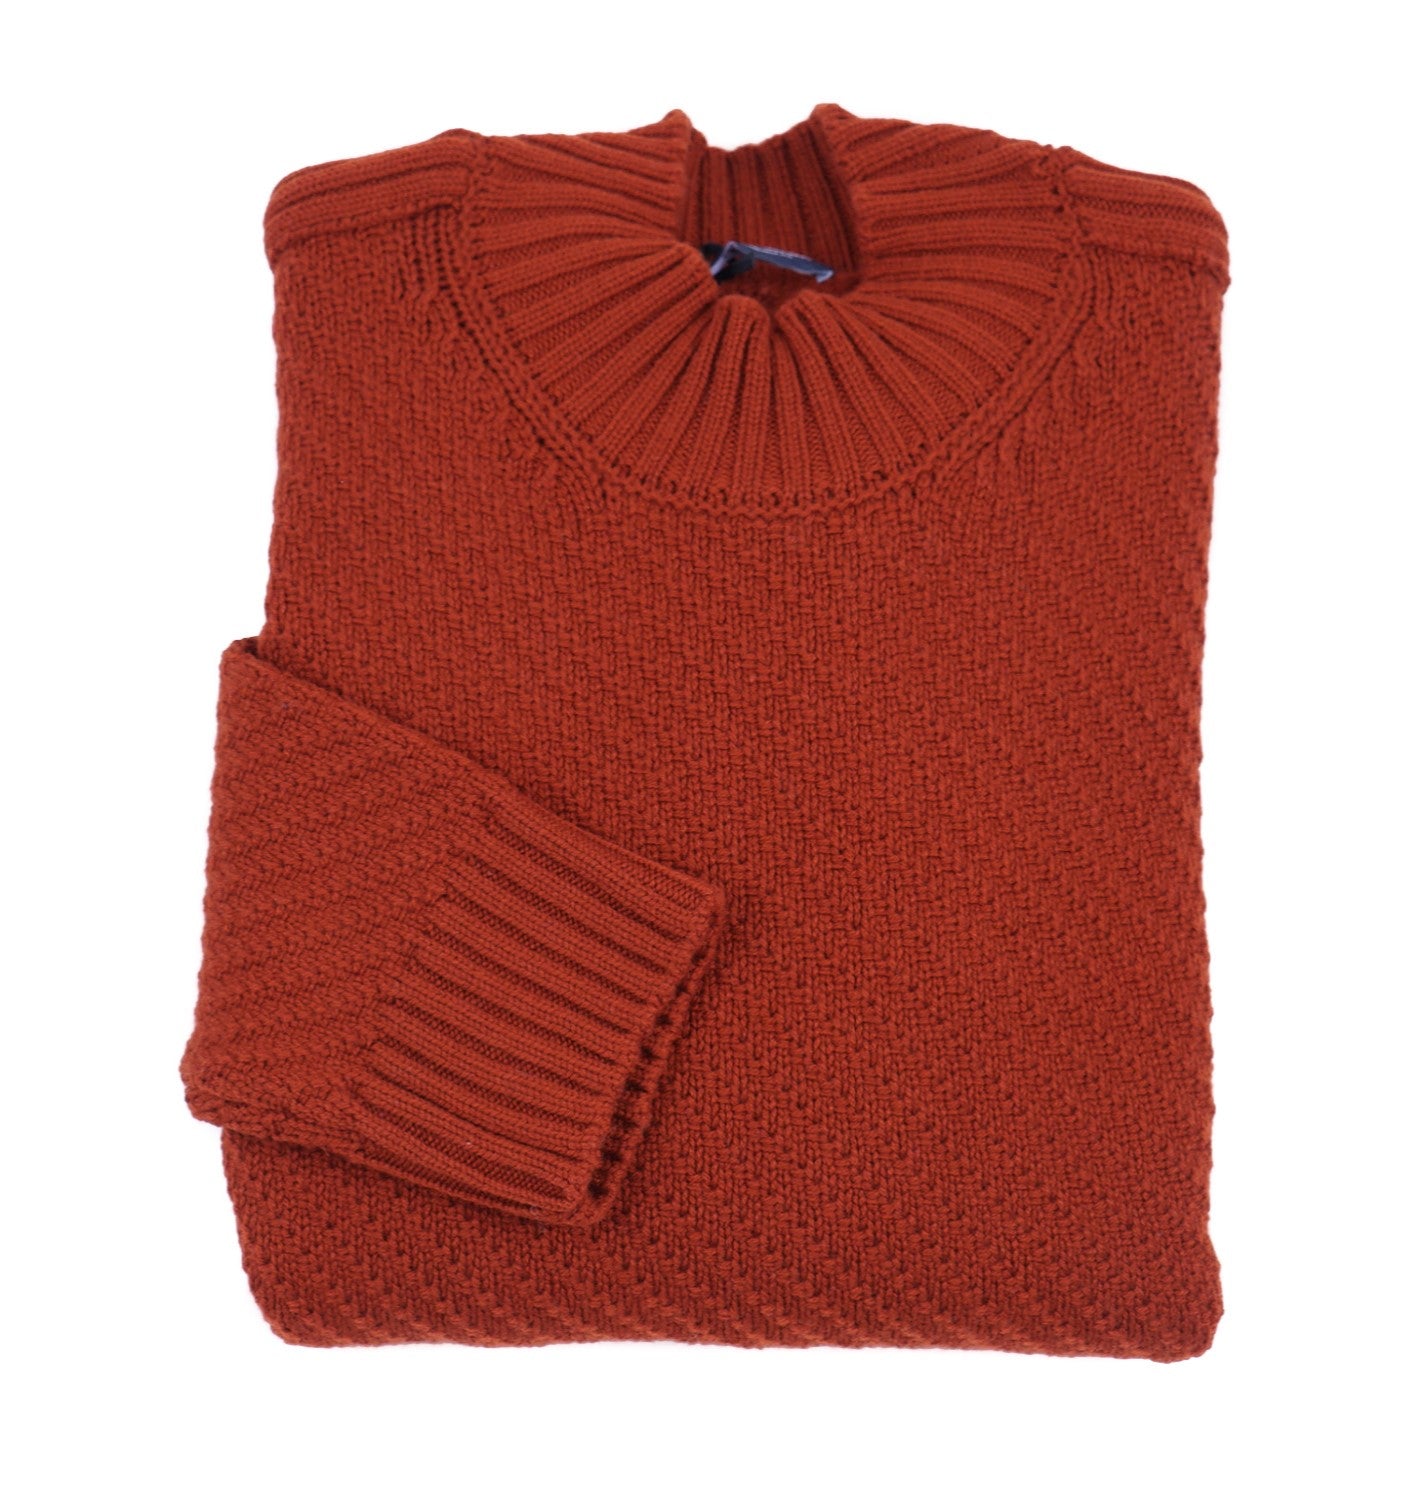 Drumohr Patterned Knit Cashmere Sweater - Top Shelf Apparel